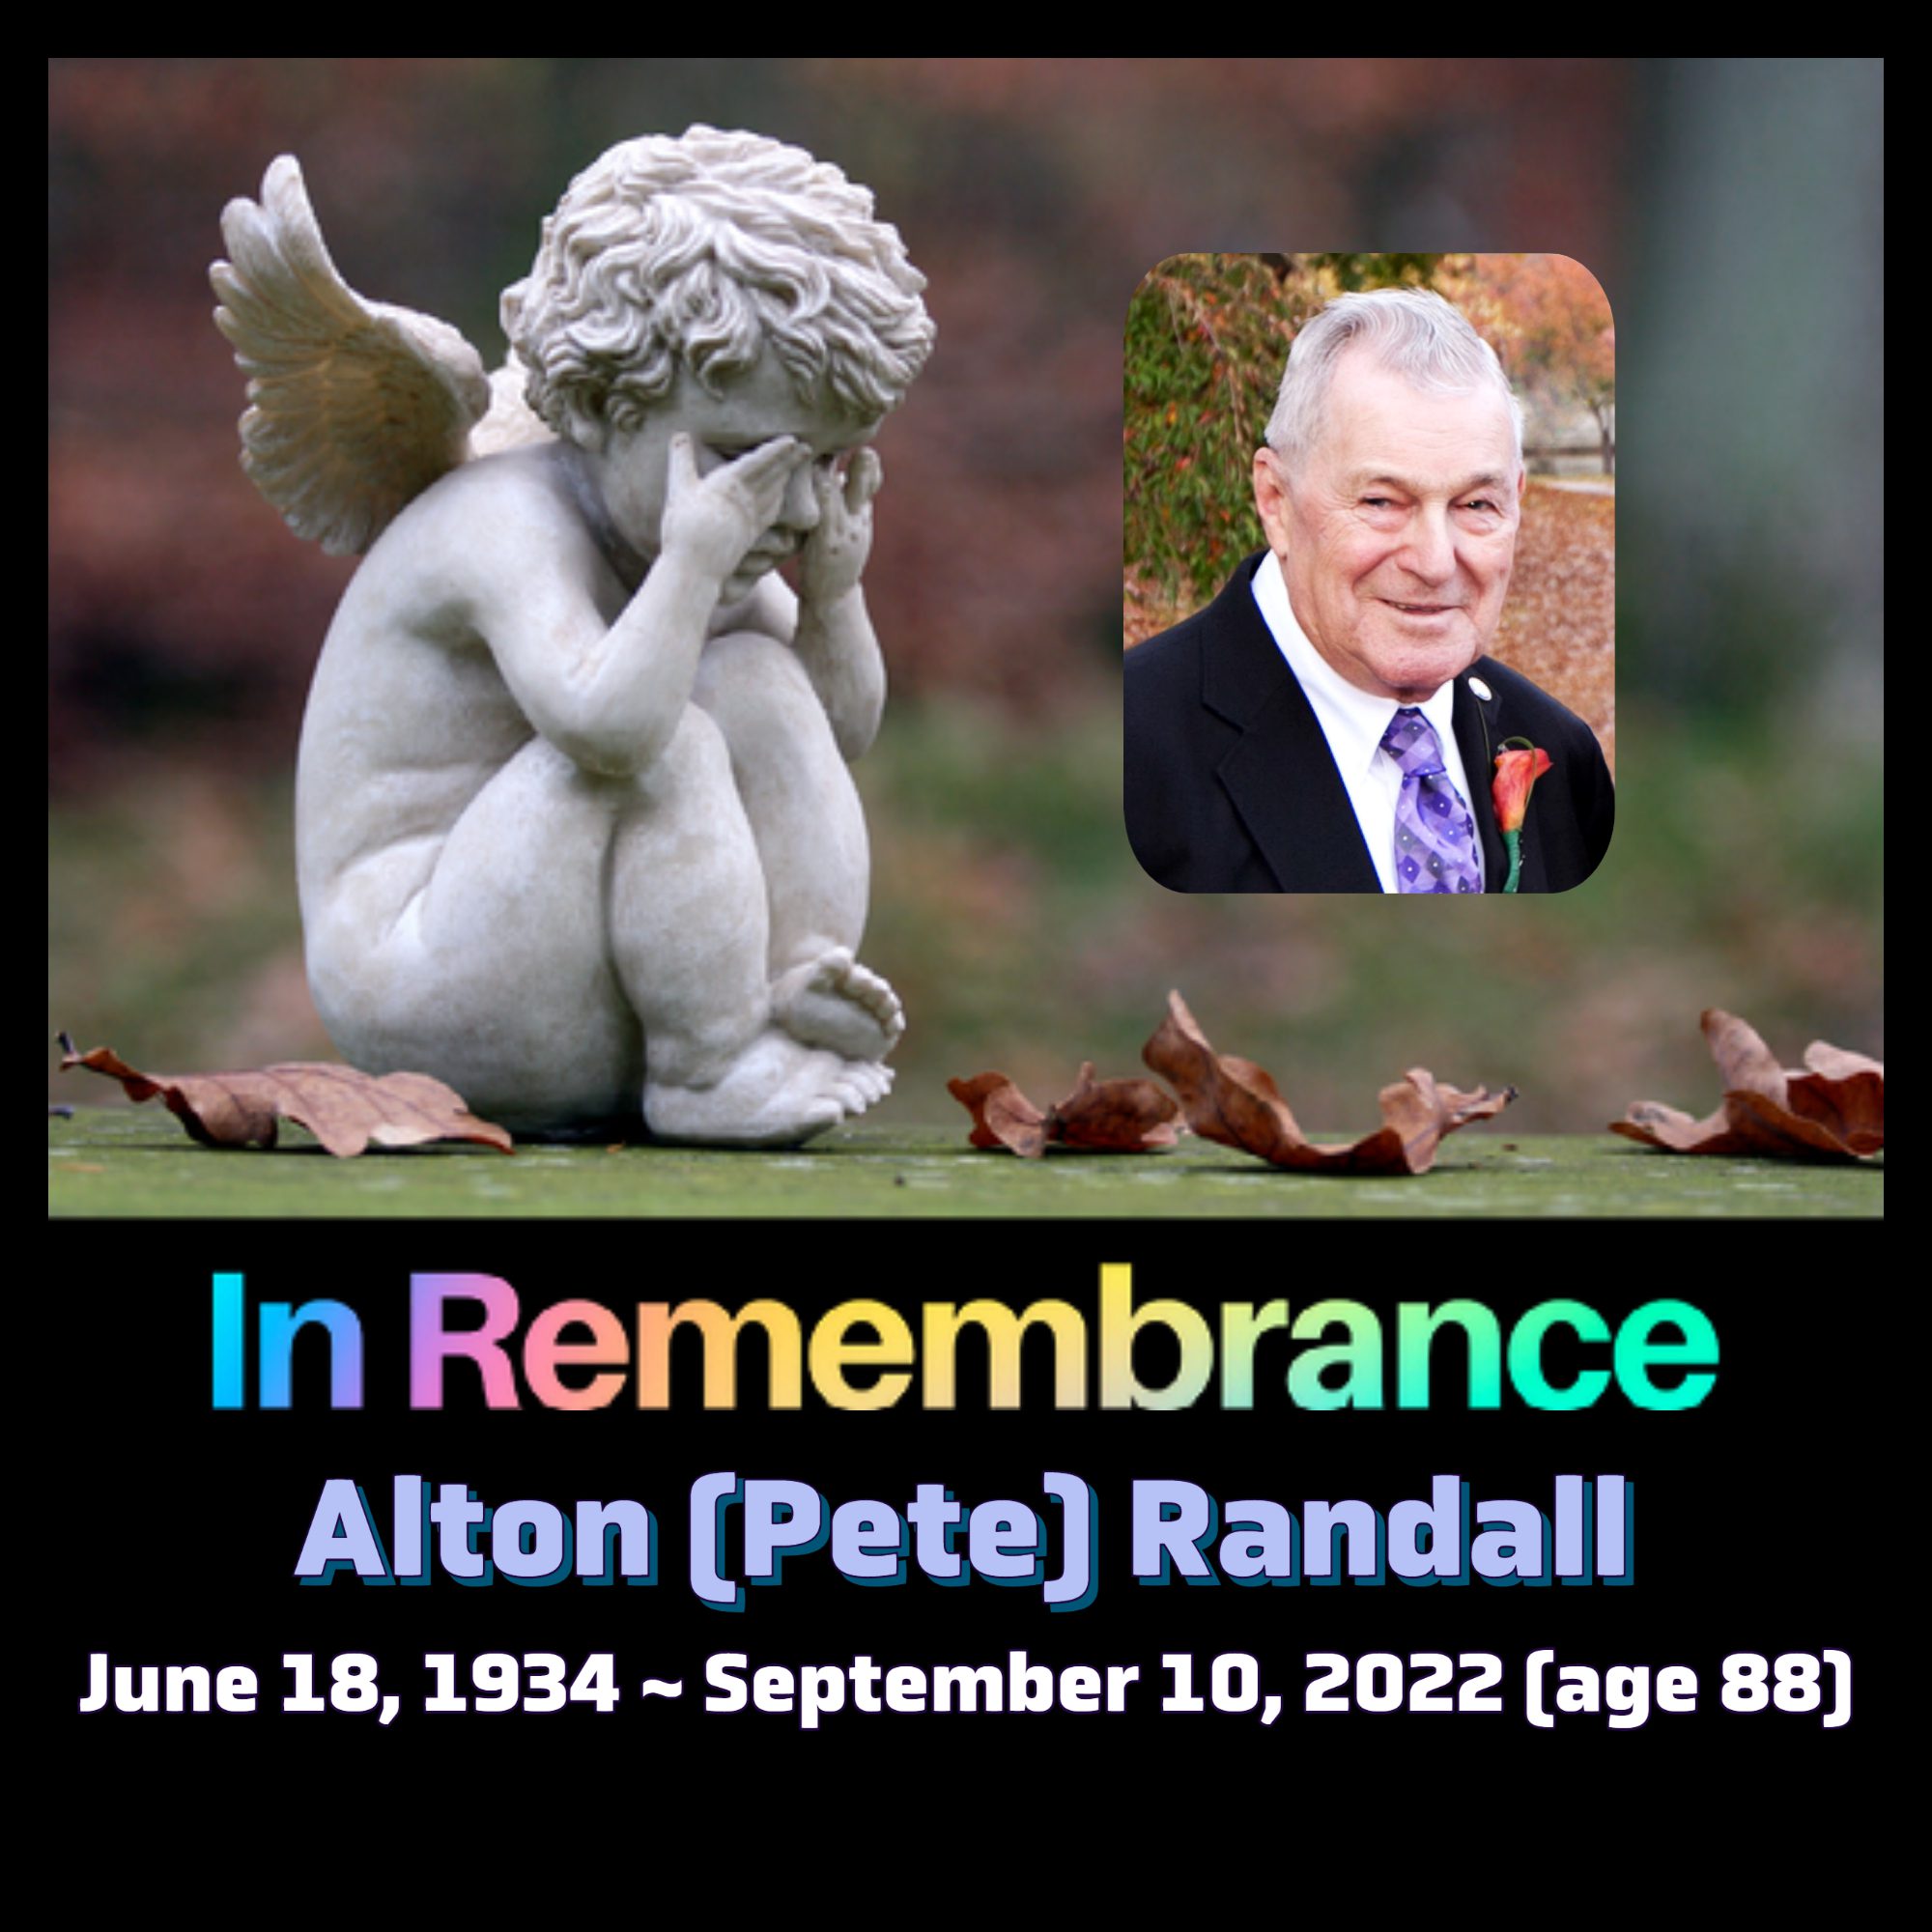 In Remembrance of Alton (Pete) Randall